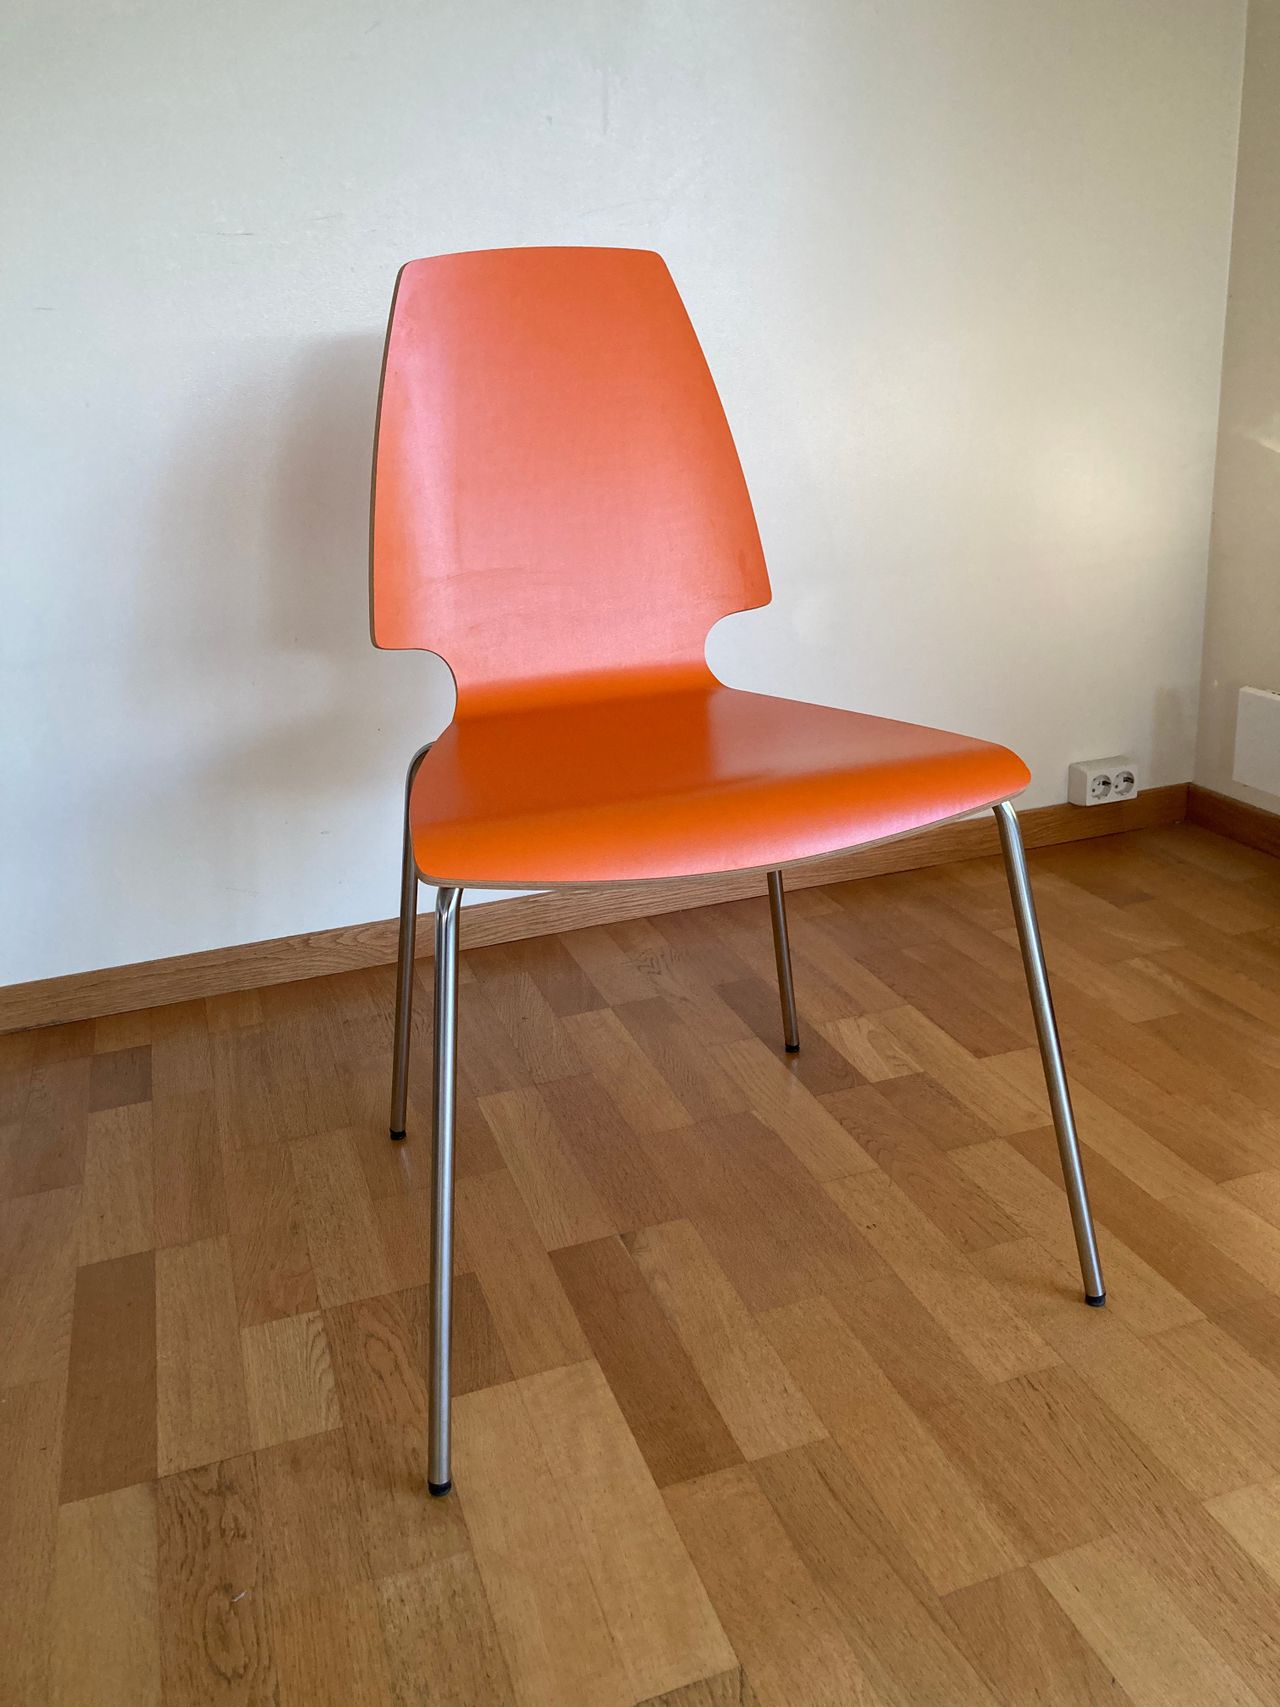 Ikea stol i orange | torget